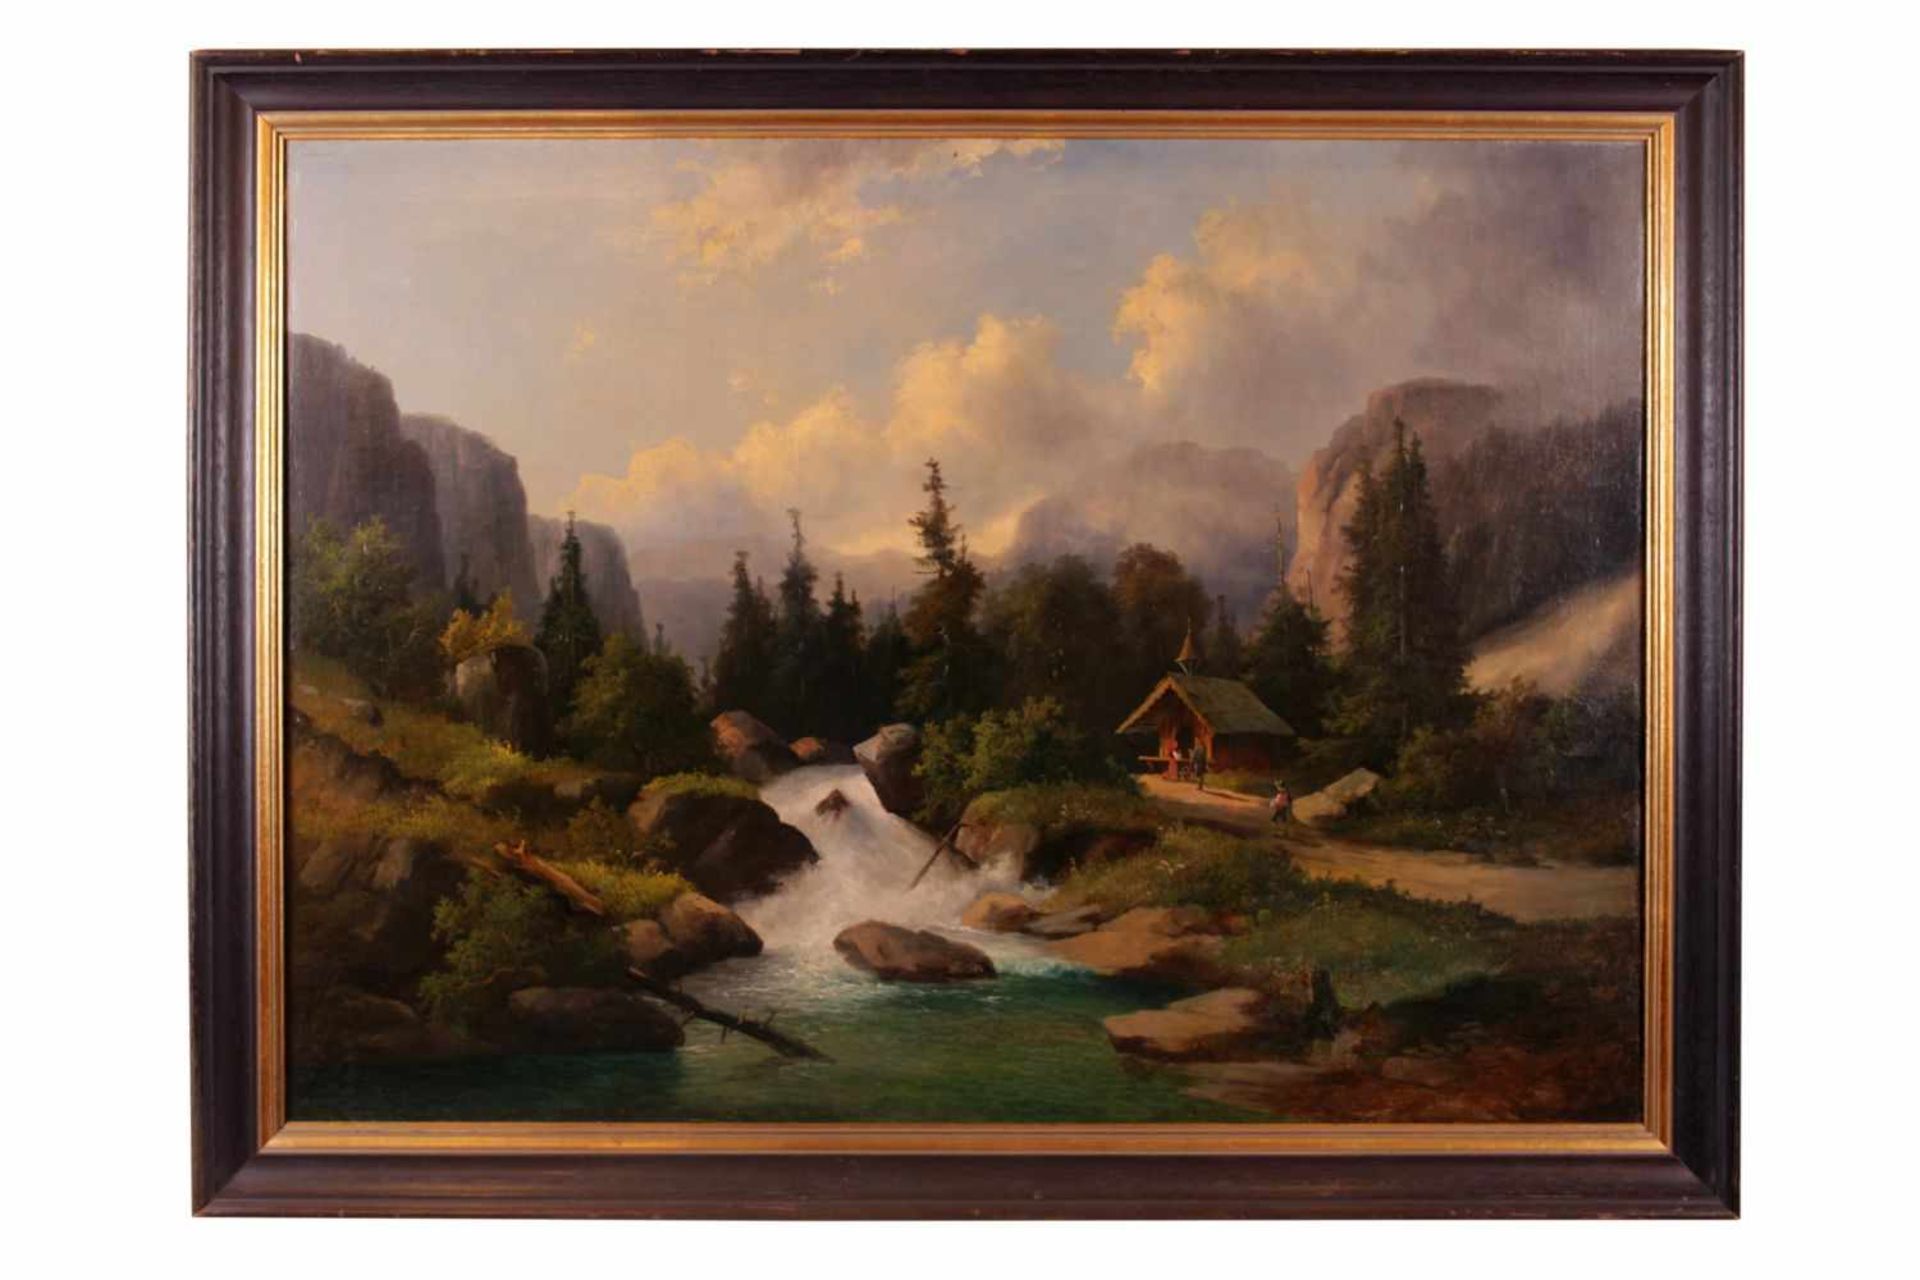 LandschaftsbildKünstler des 19. JahrhundertsÖl auf Leinwand42,5 x 98,5 cm, gerahmt, 19.